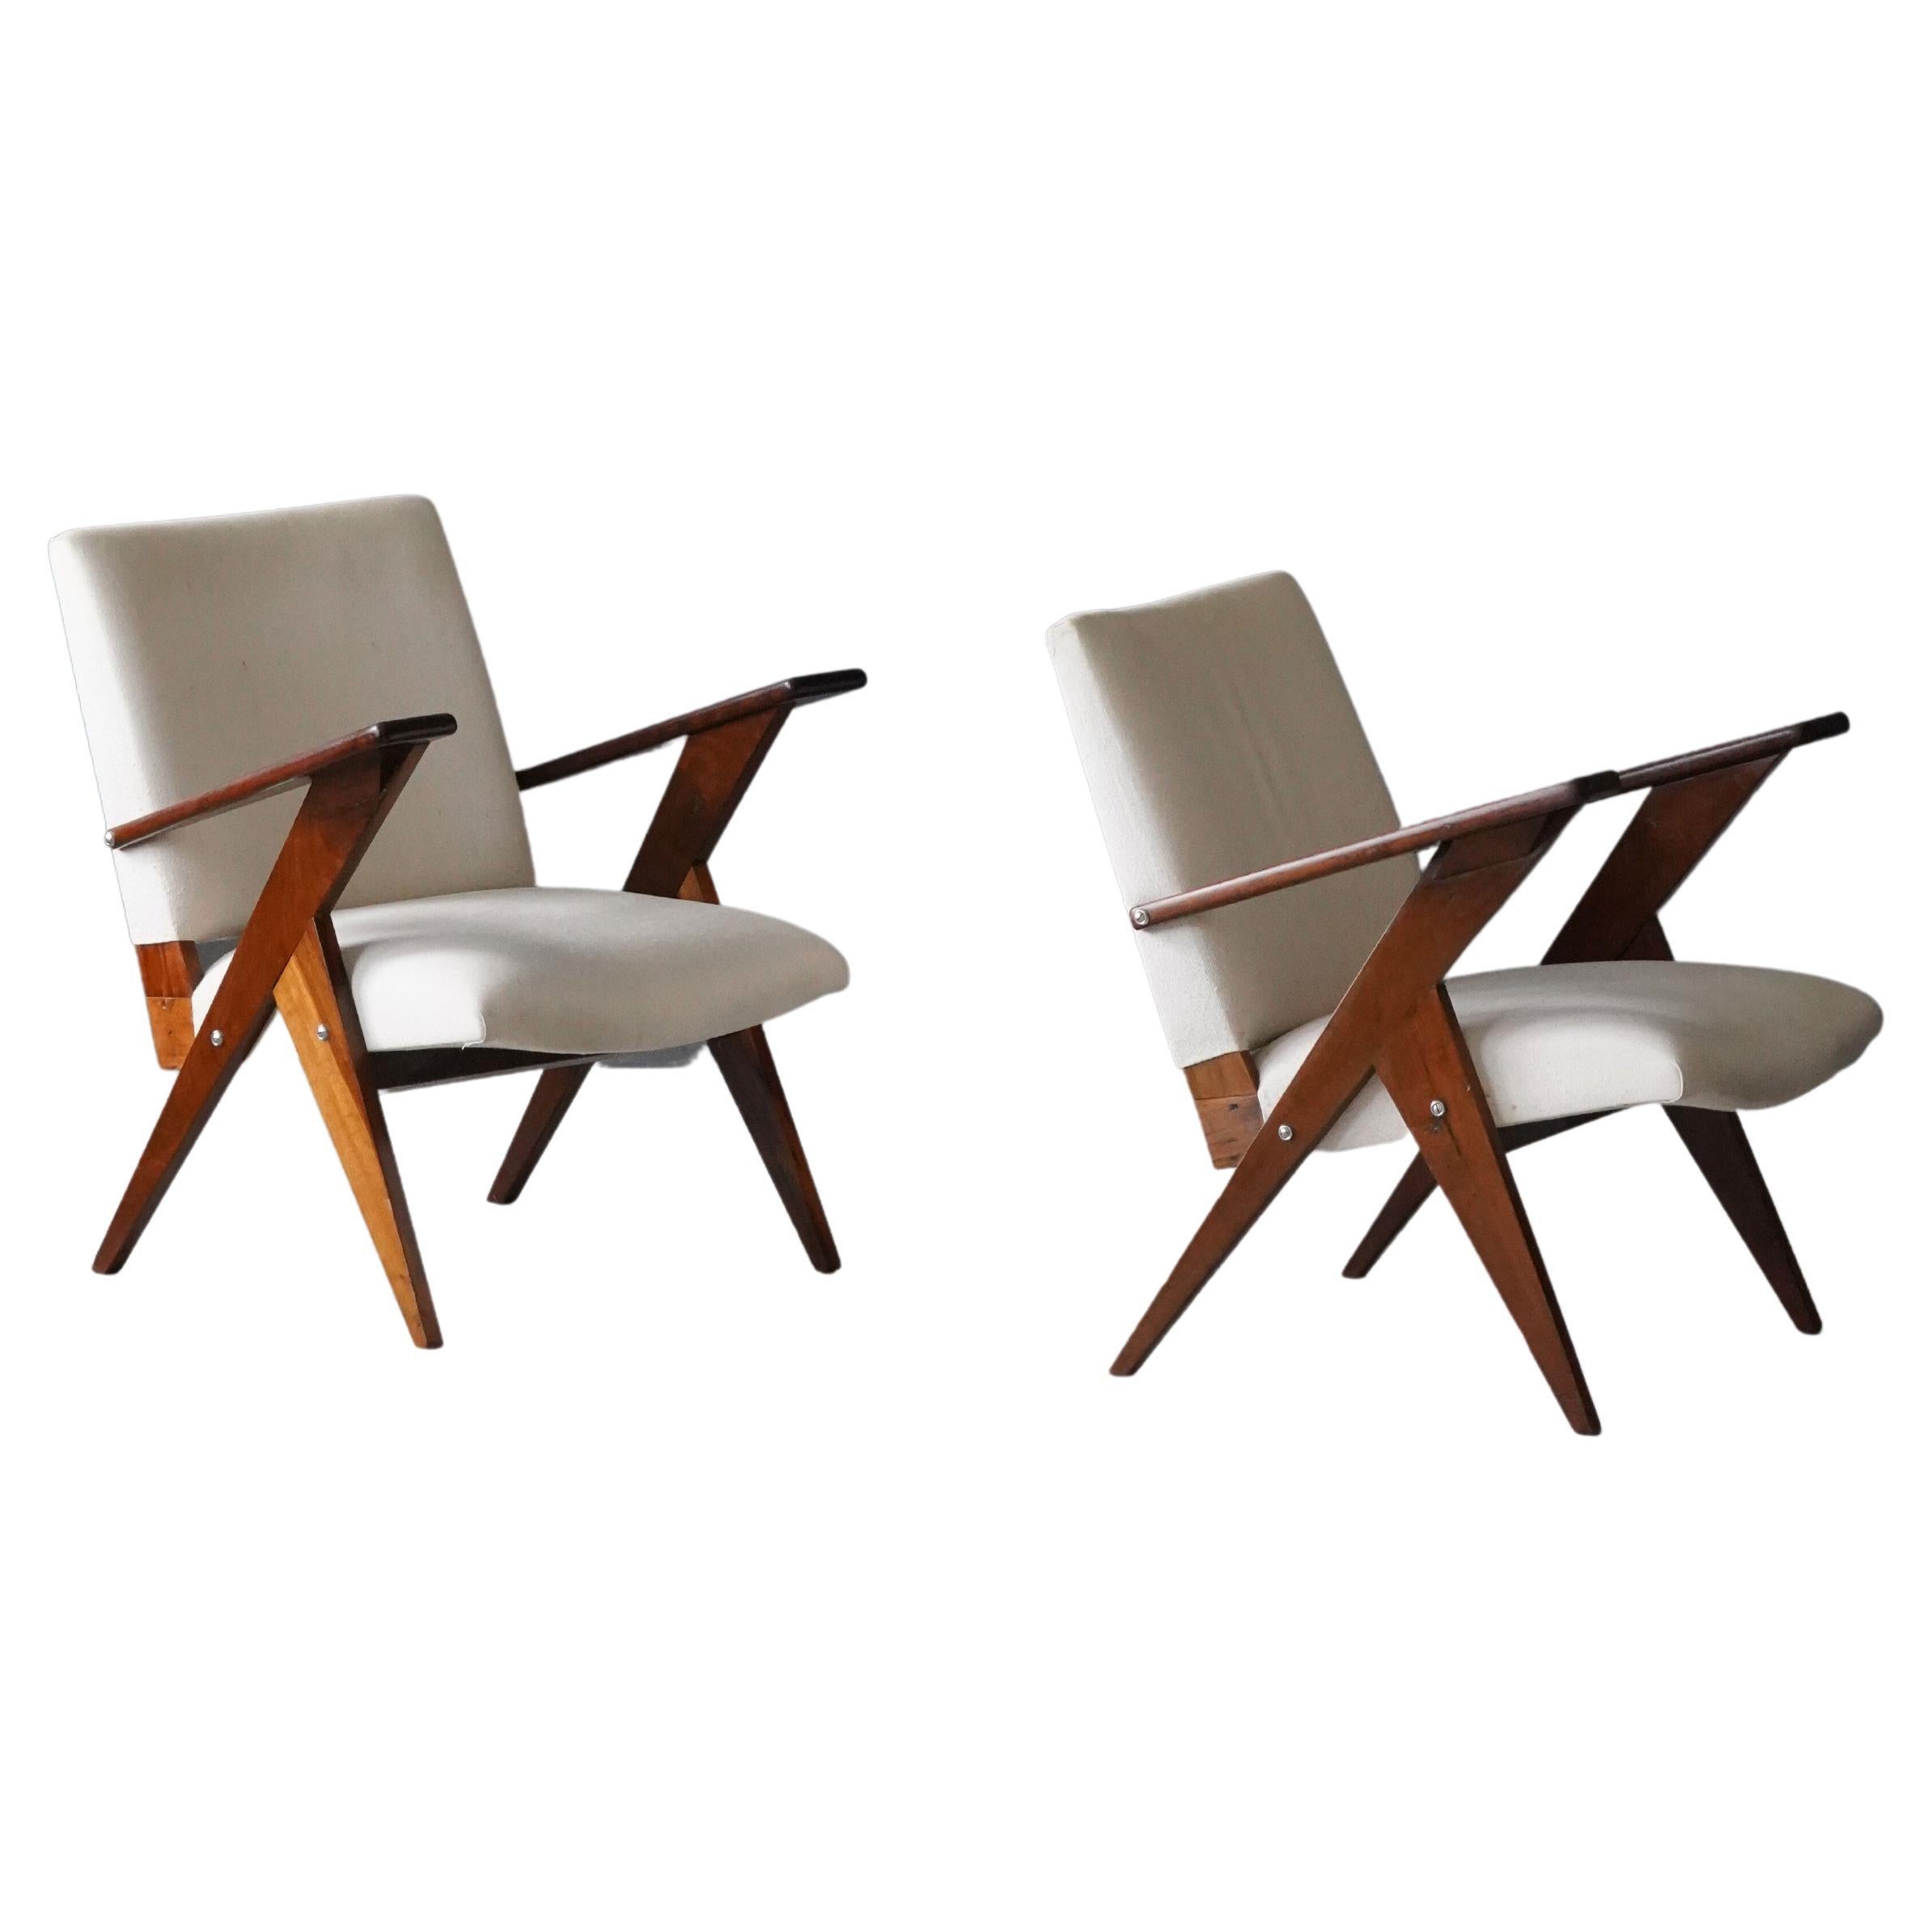 José Zanine Caldas, Lounge Chairs, Imbuia Wood Fabric, Mòveis Artisticos Z 1950s